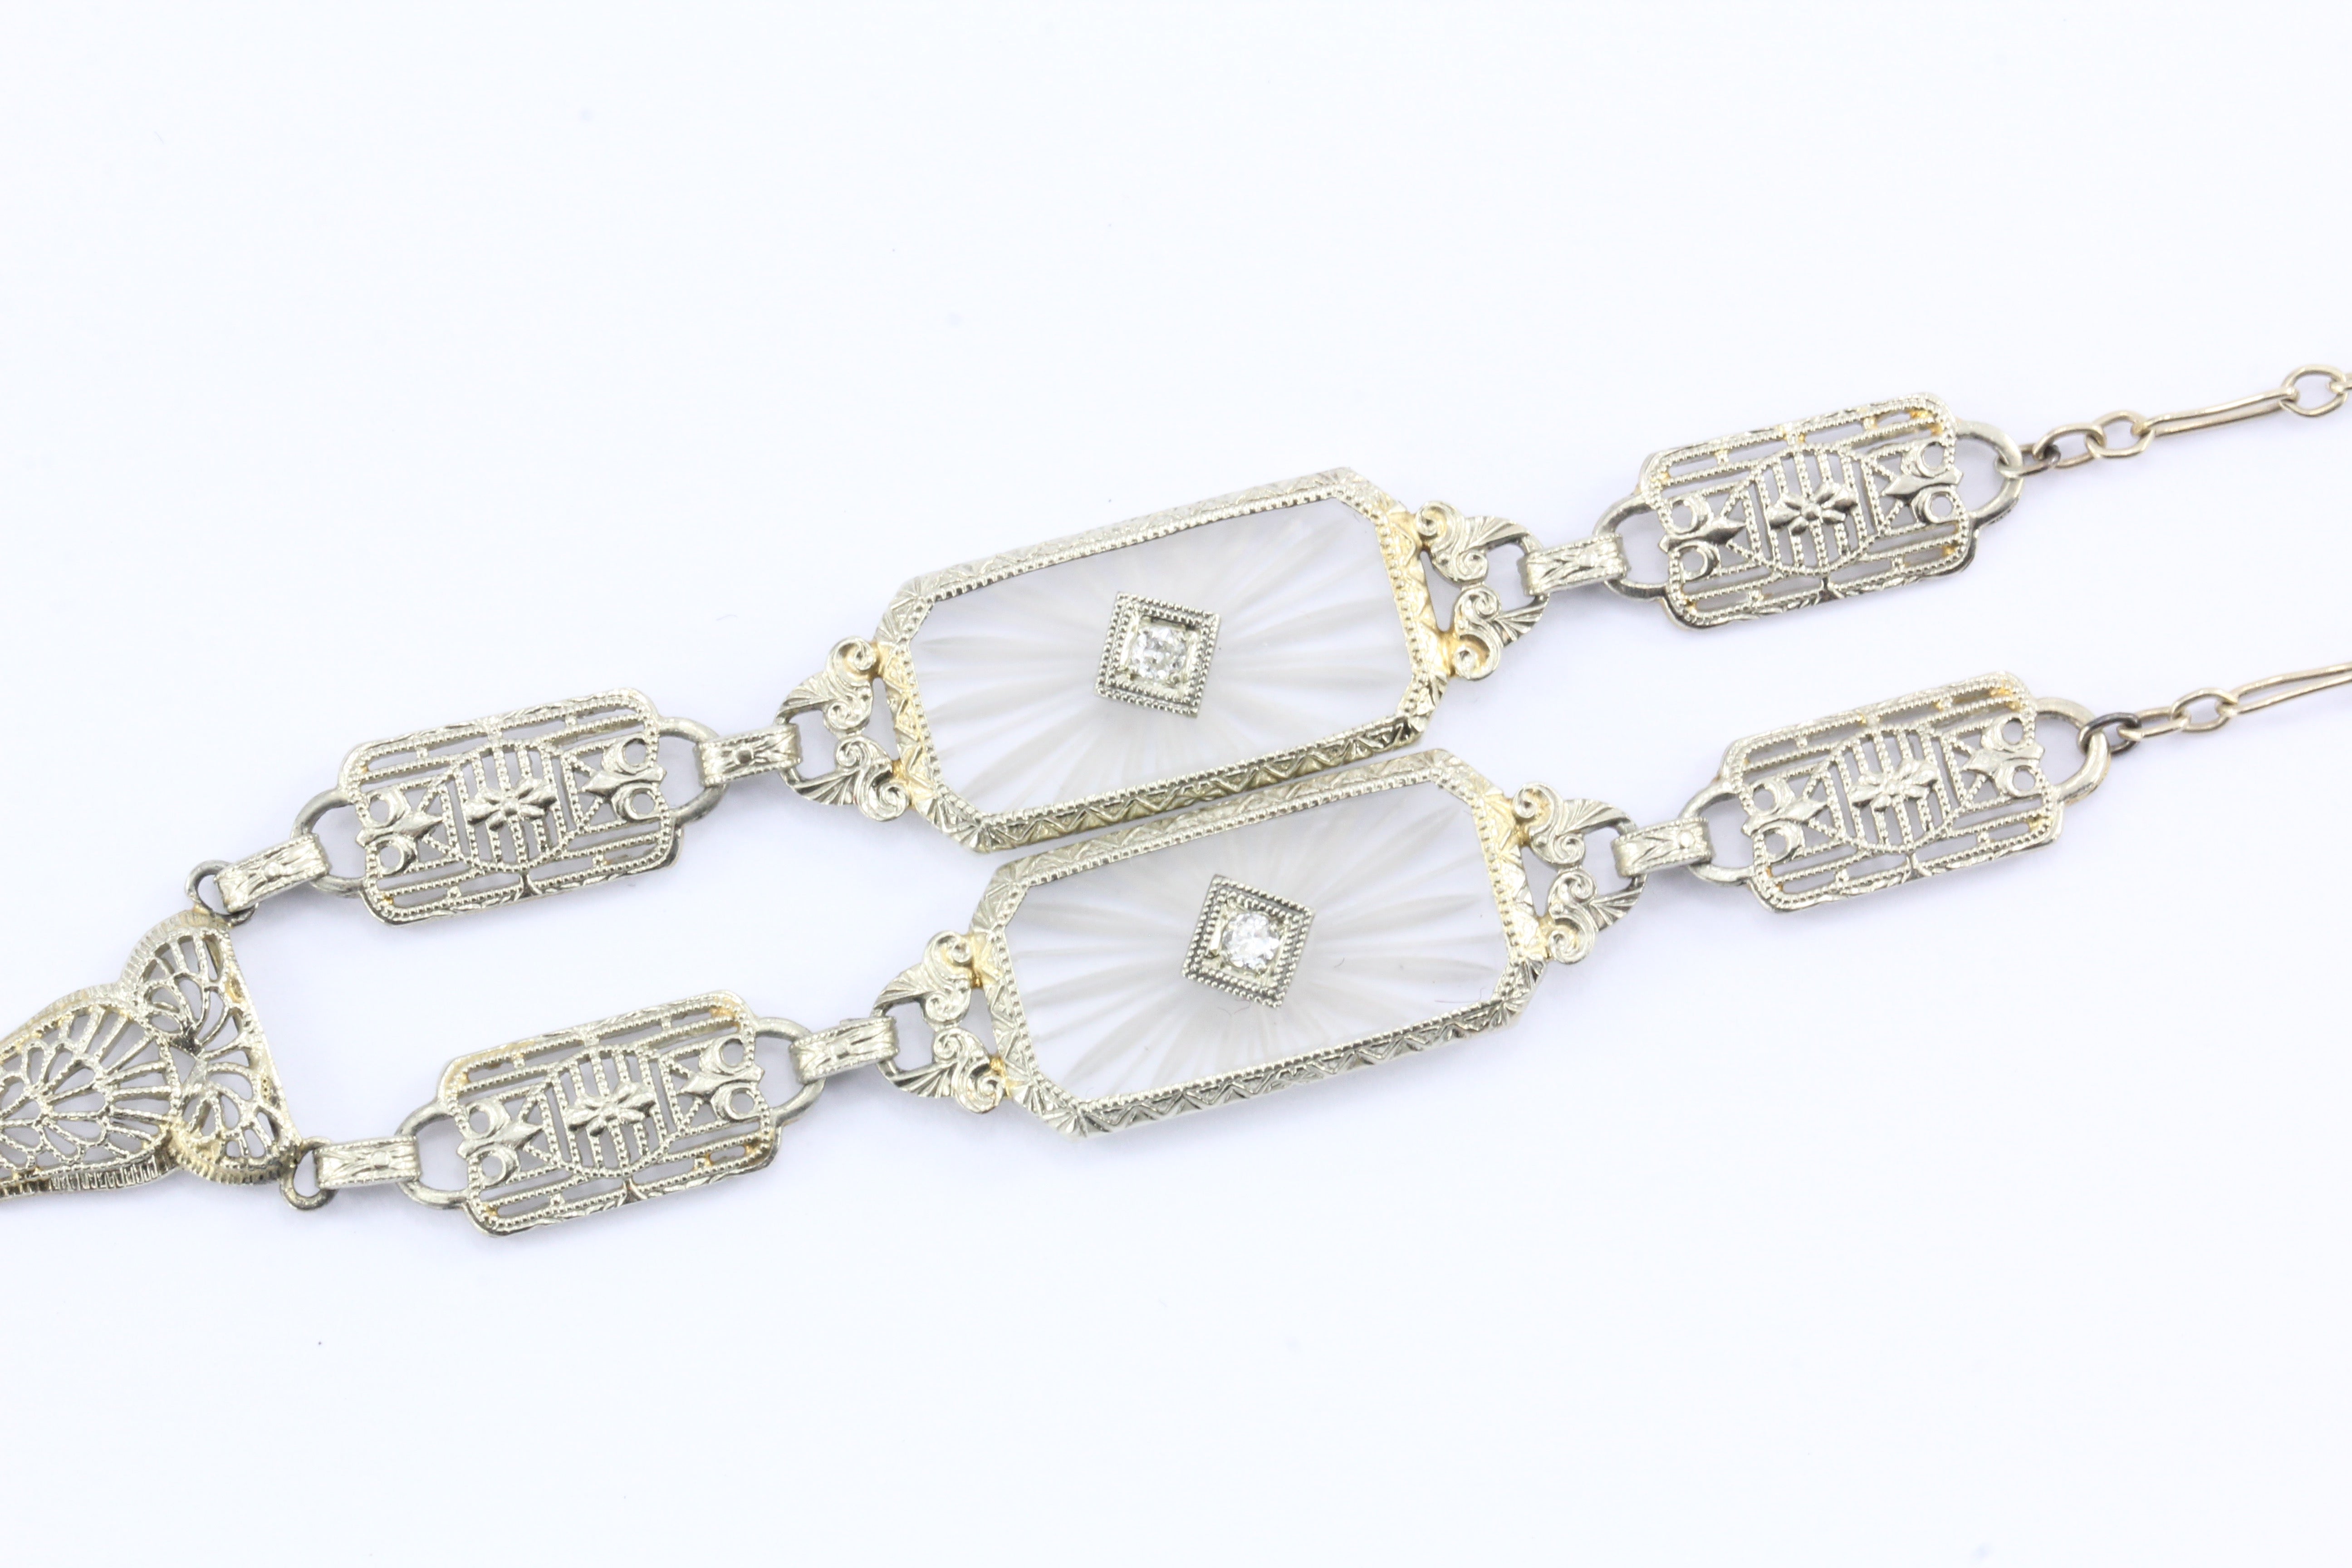 Sale - Rock Crystal Quartz Necklace - Art Deco 14K White Gold Diamond Pendant - Vintage Circa 1930s Era Statement Filigree Fine 30S Jewelry No Chain